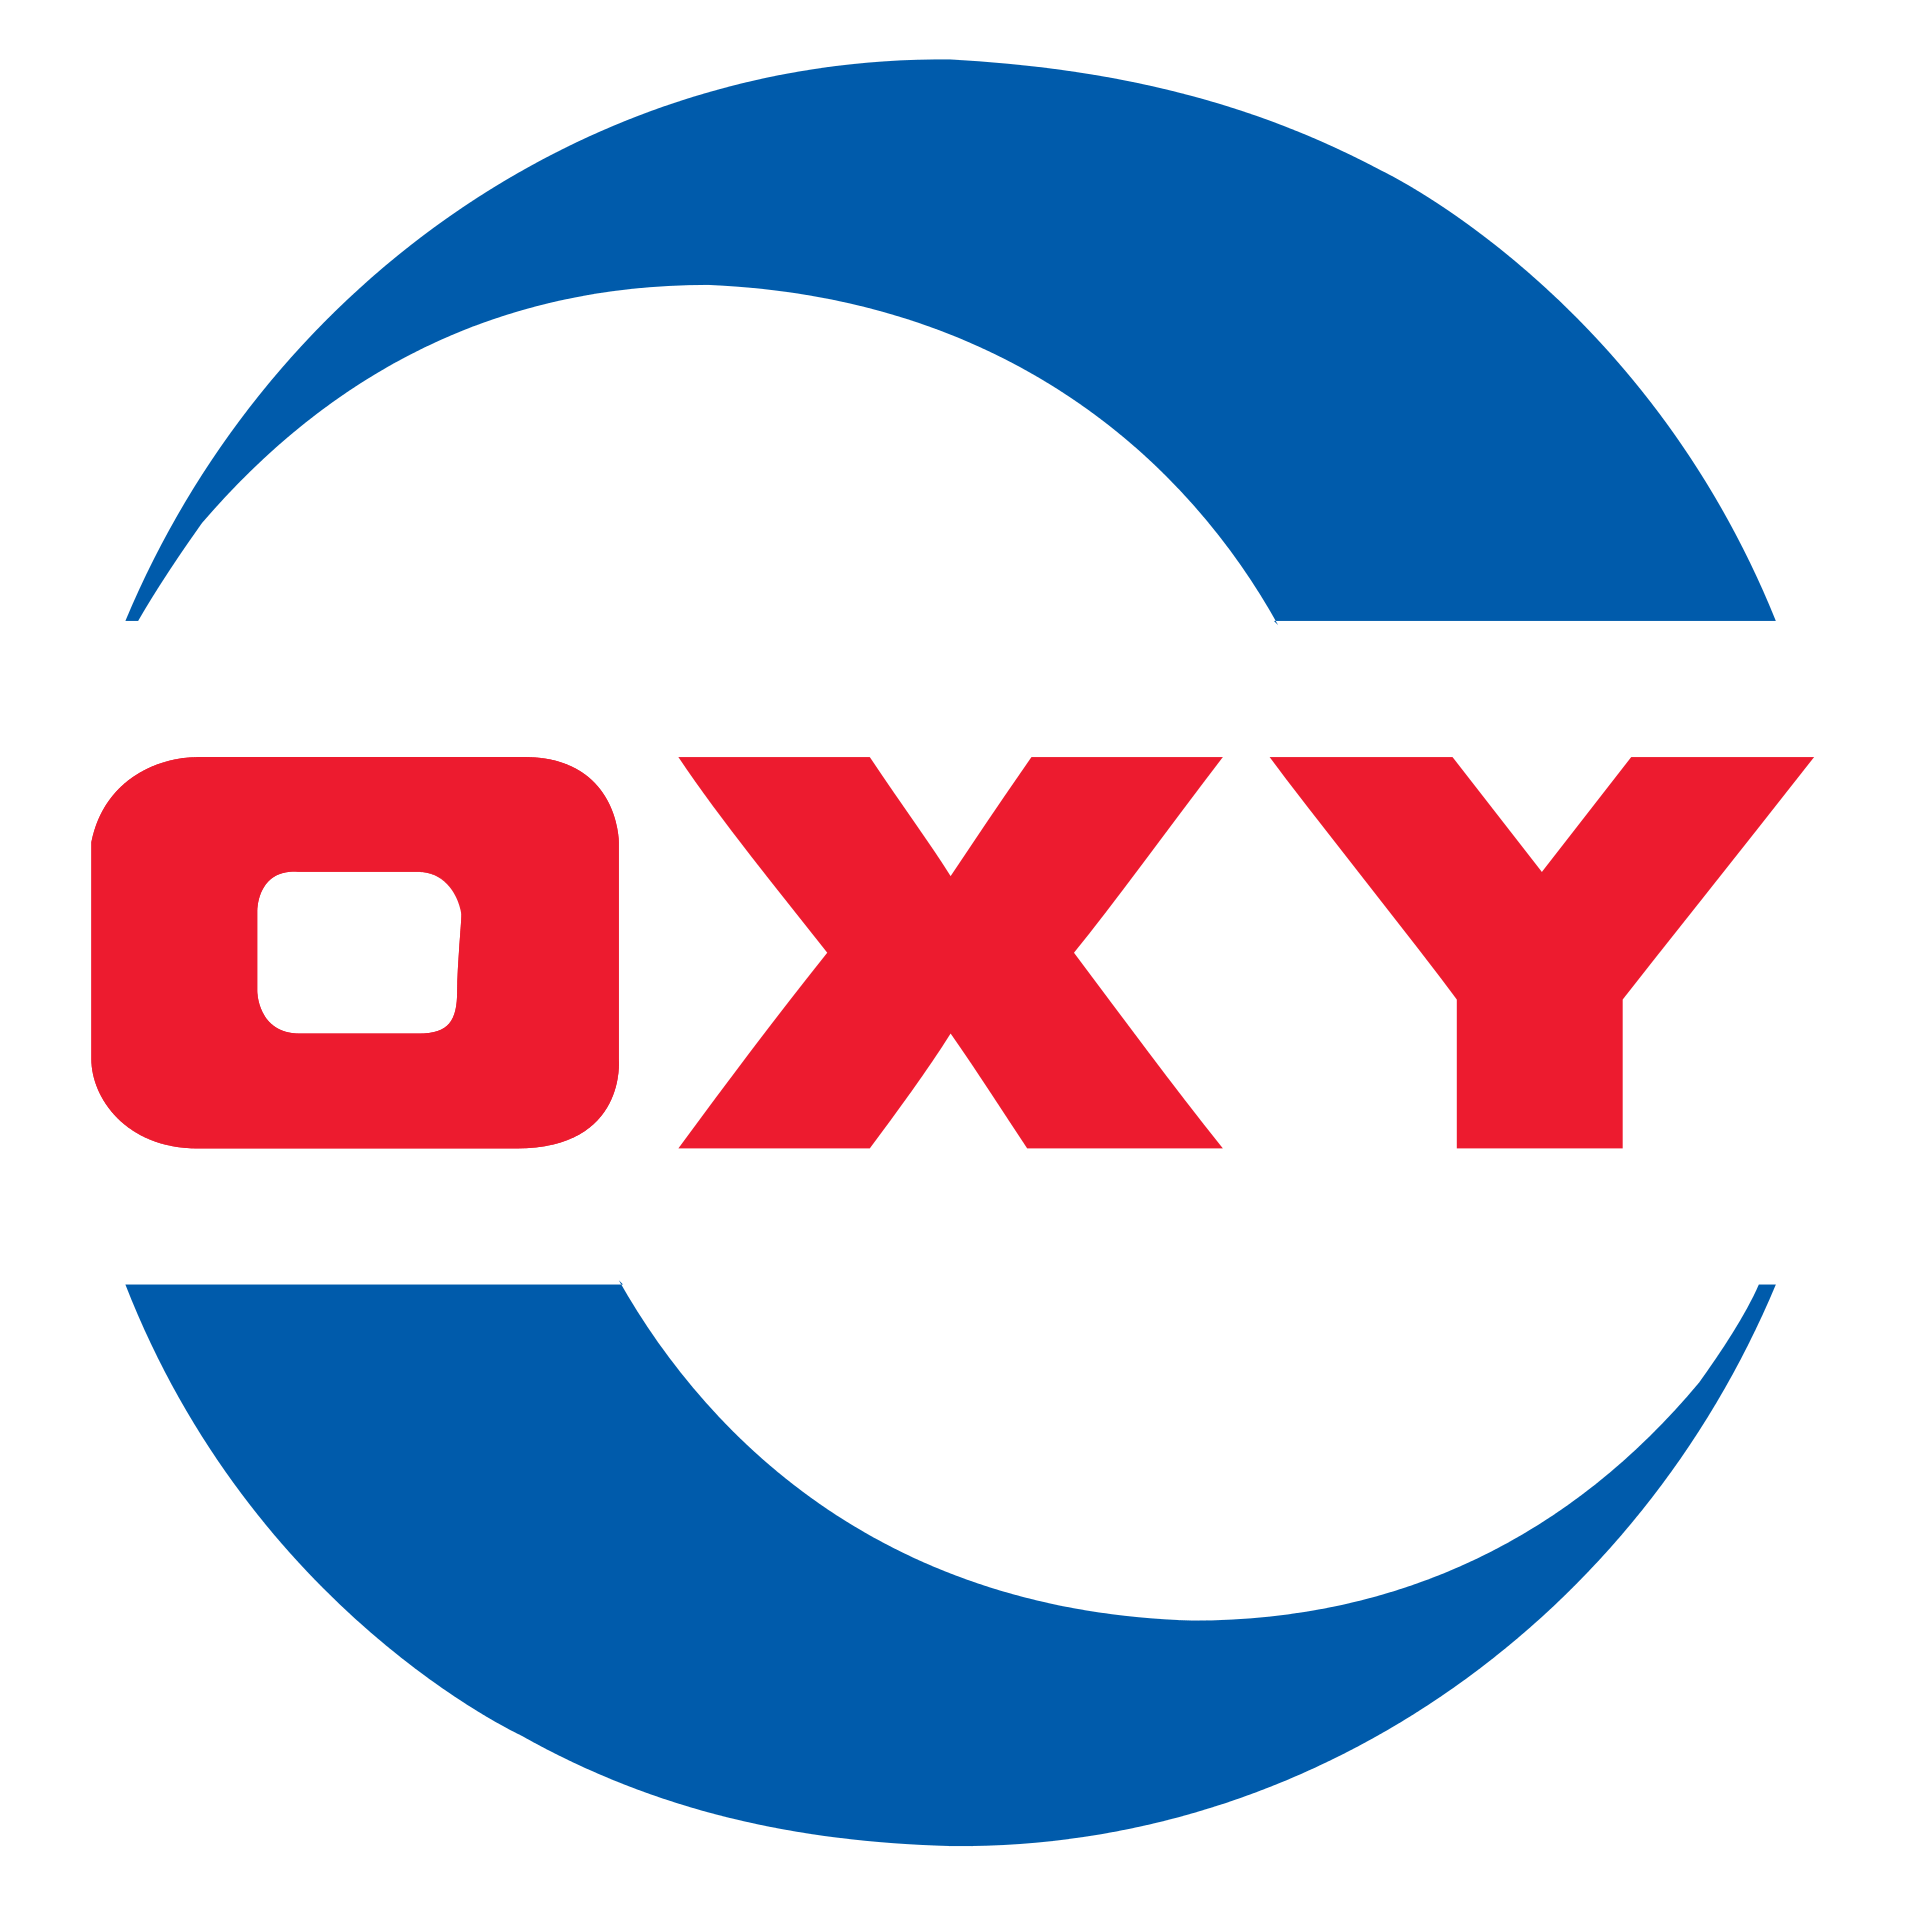 Oxy Logo - OXY Occidental Petroleum Logo PNG Image - PurePNG | Free transparent ...